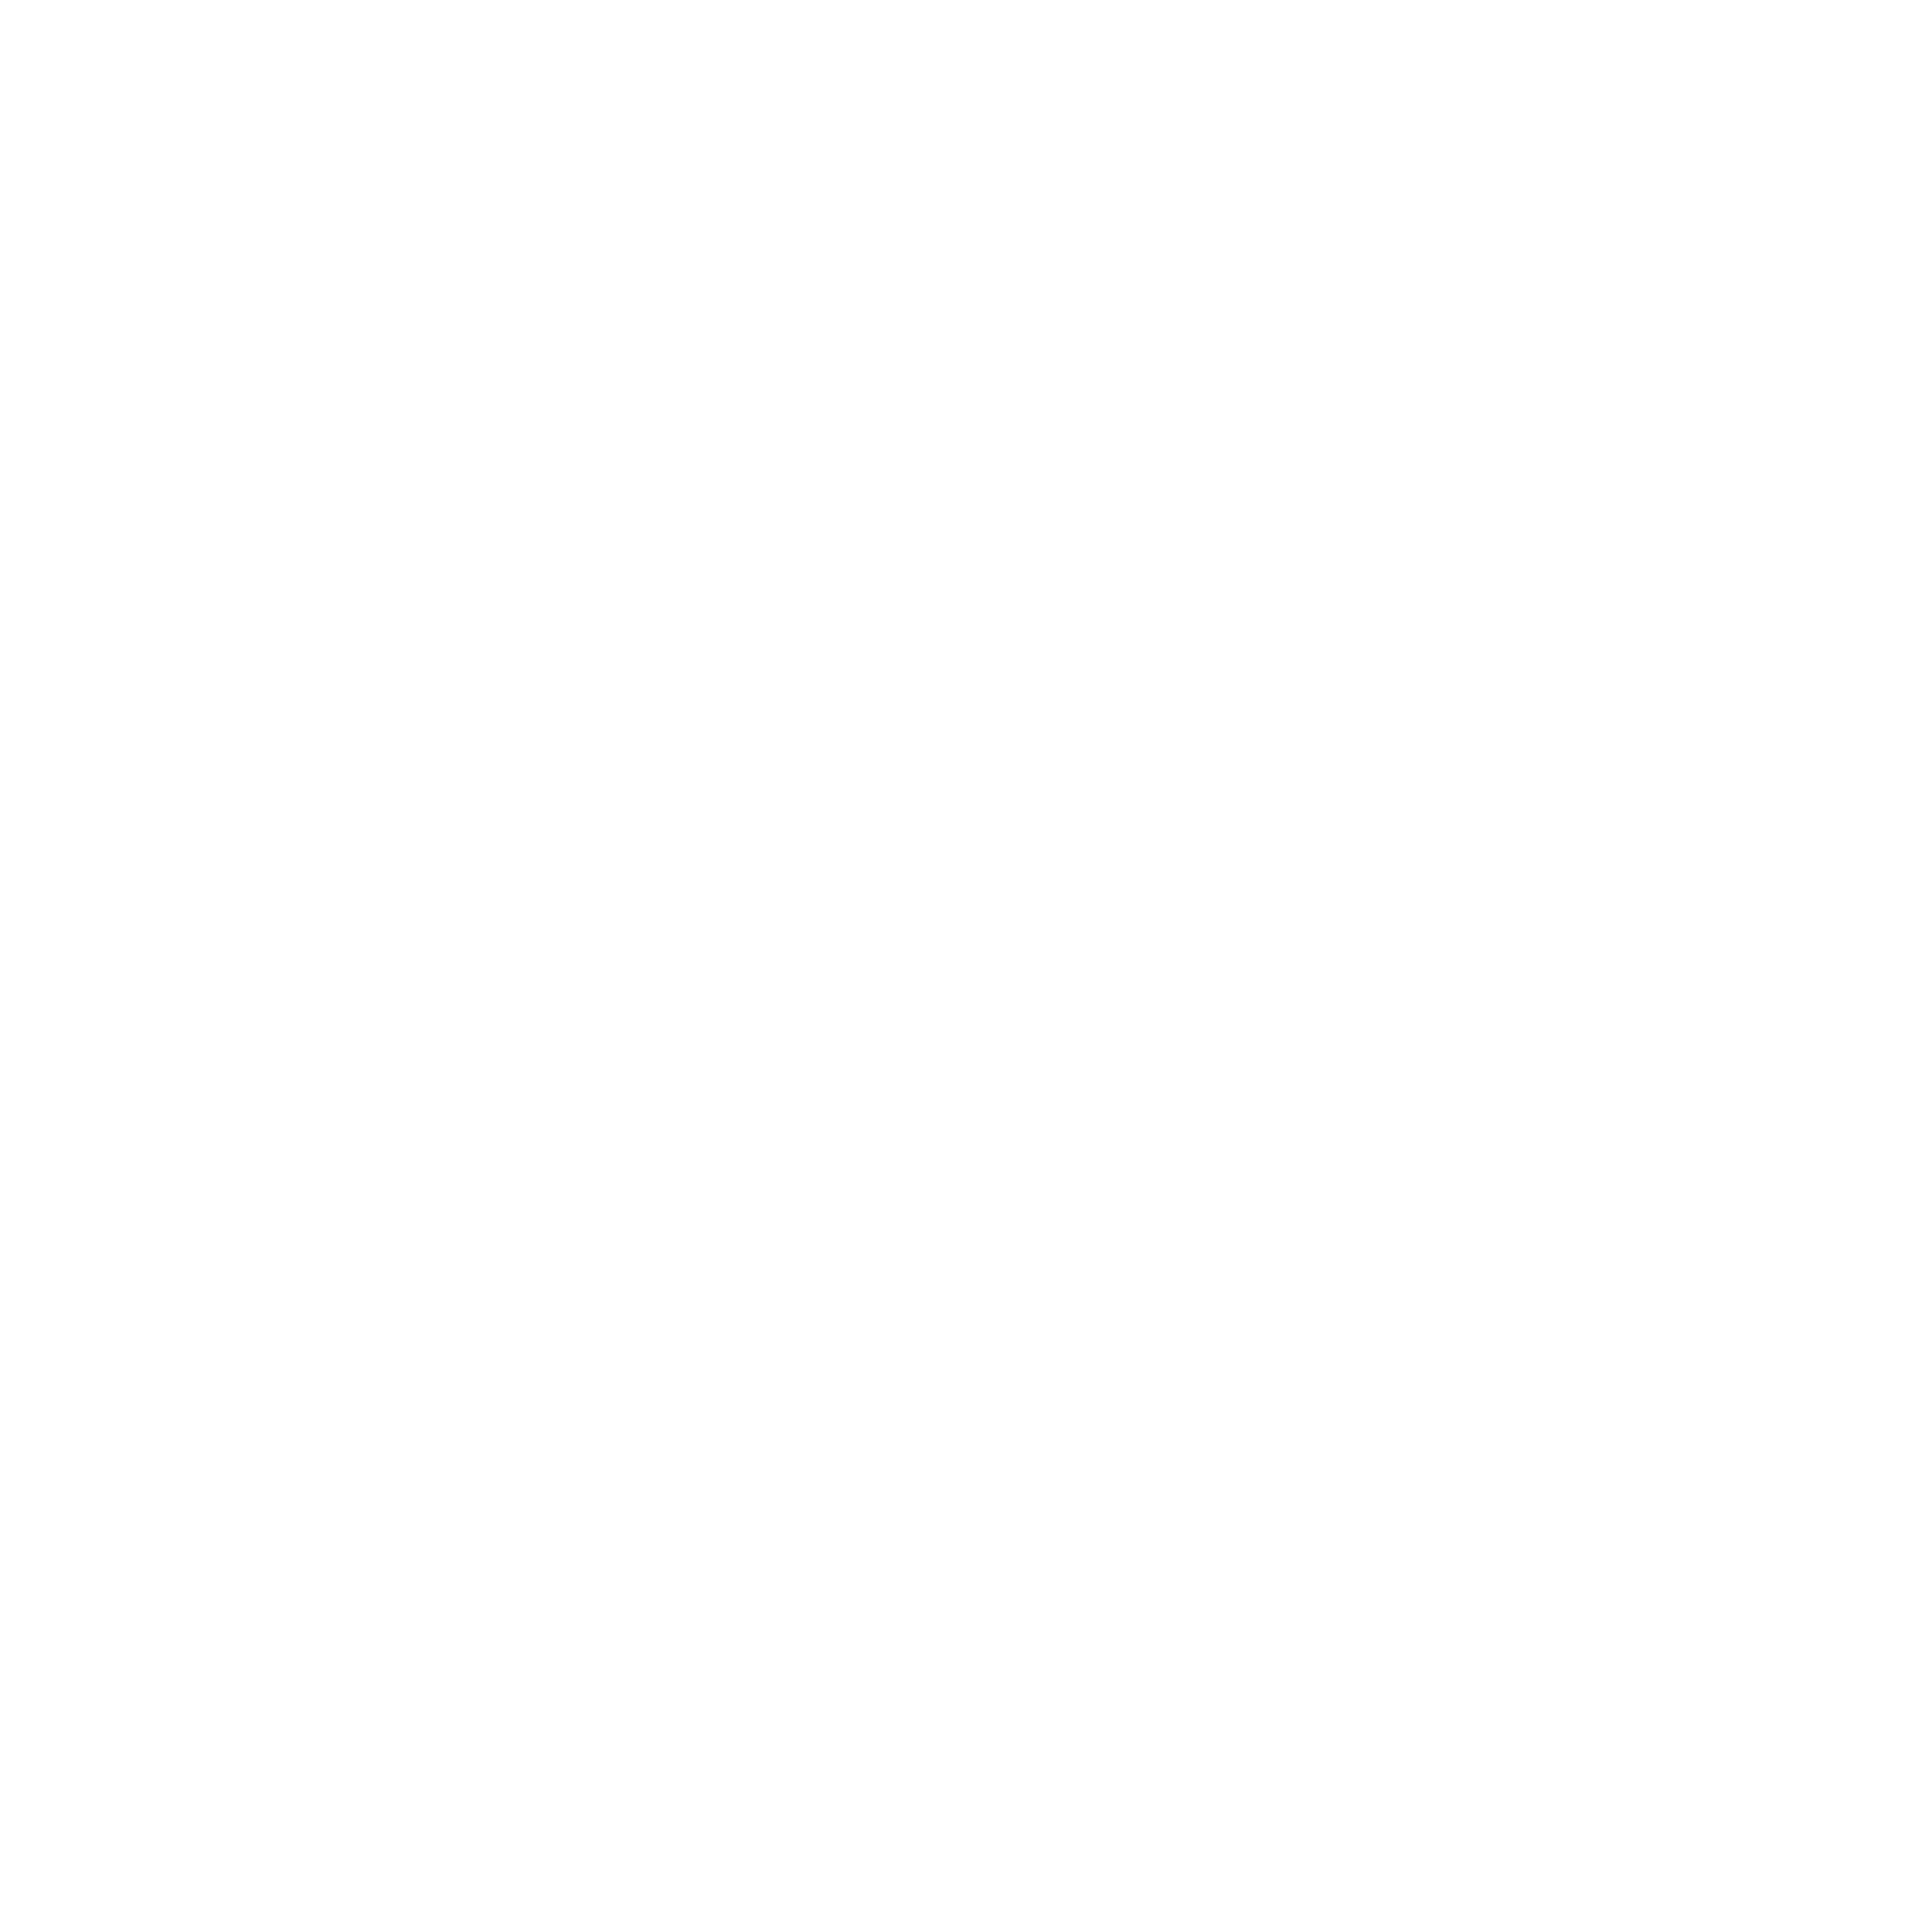 1883 Reserve Napa Valley